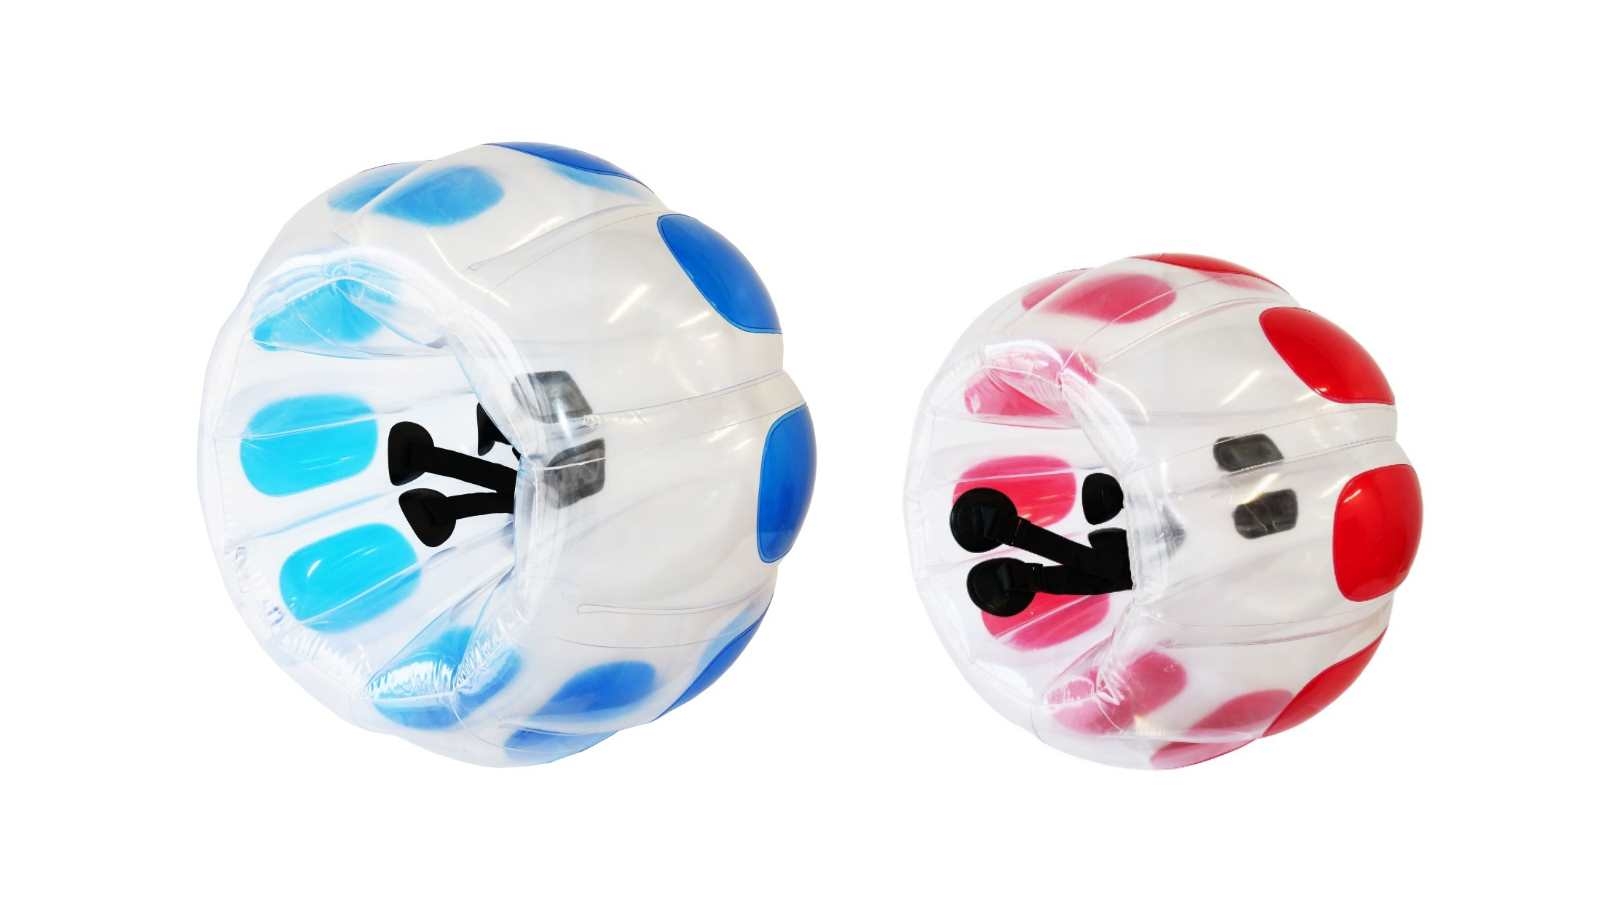 Buy Jenjo Adult Inflatable Bubble Soccer Ball Harvey Norman AU